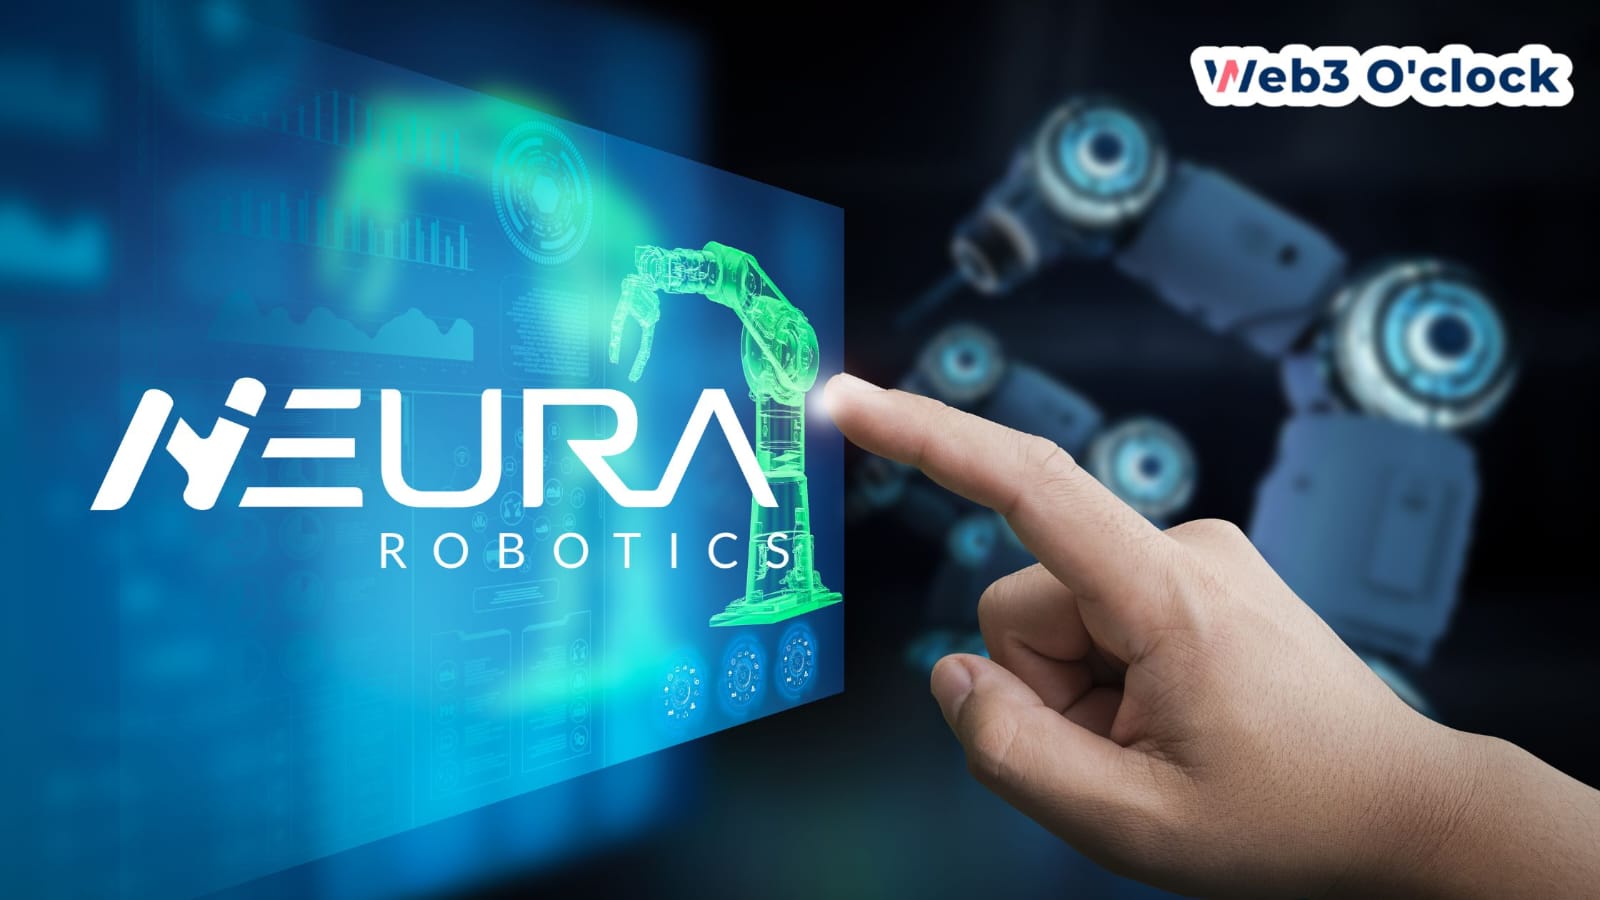 Neura Robotics Secures $55 Million by web3oclock